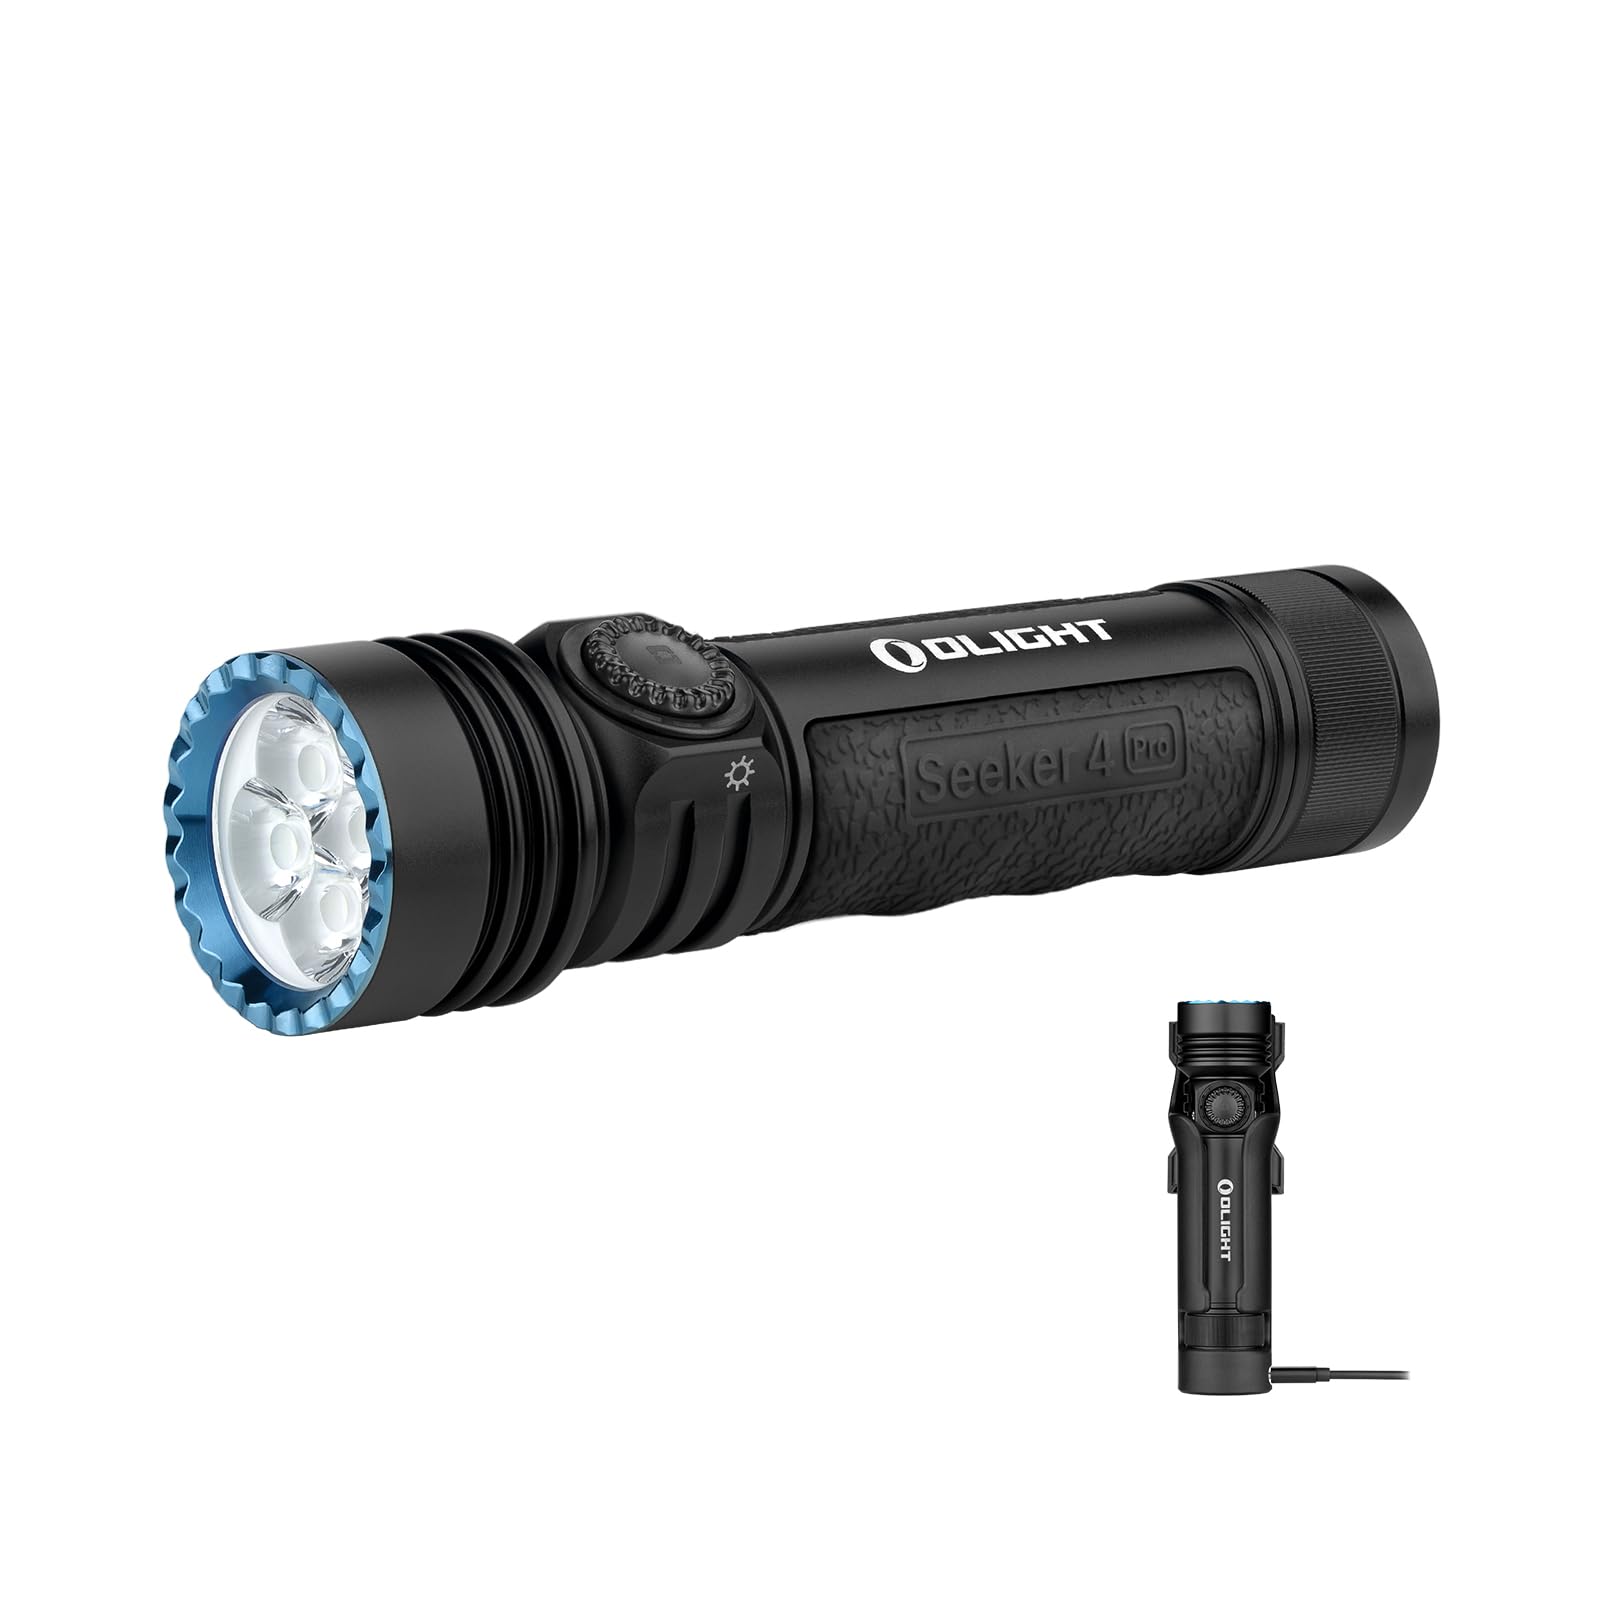 Olight Seeker 4 Pro Rechargeable Flashlights, High Lumens Powerful Bright Flashlight 4600 lumens